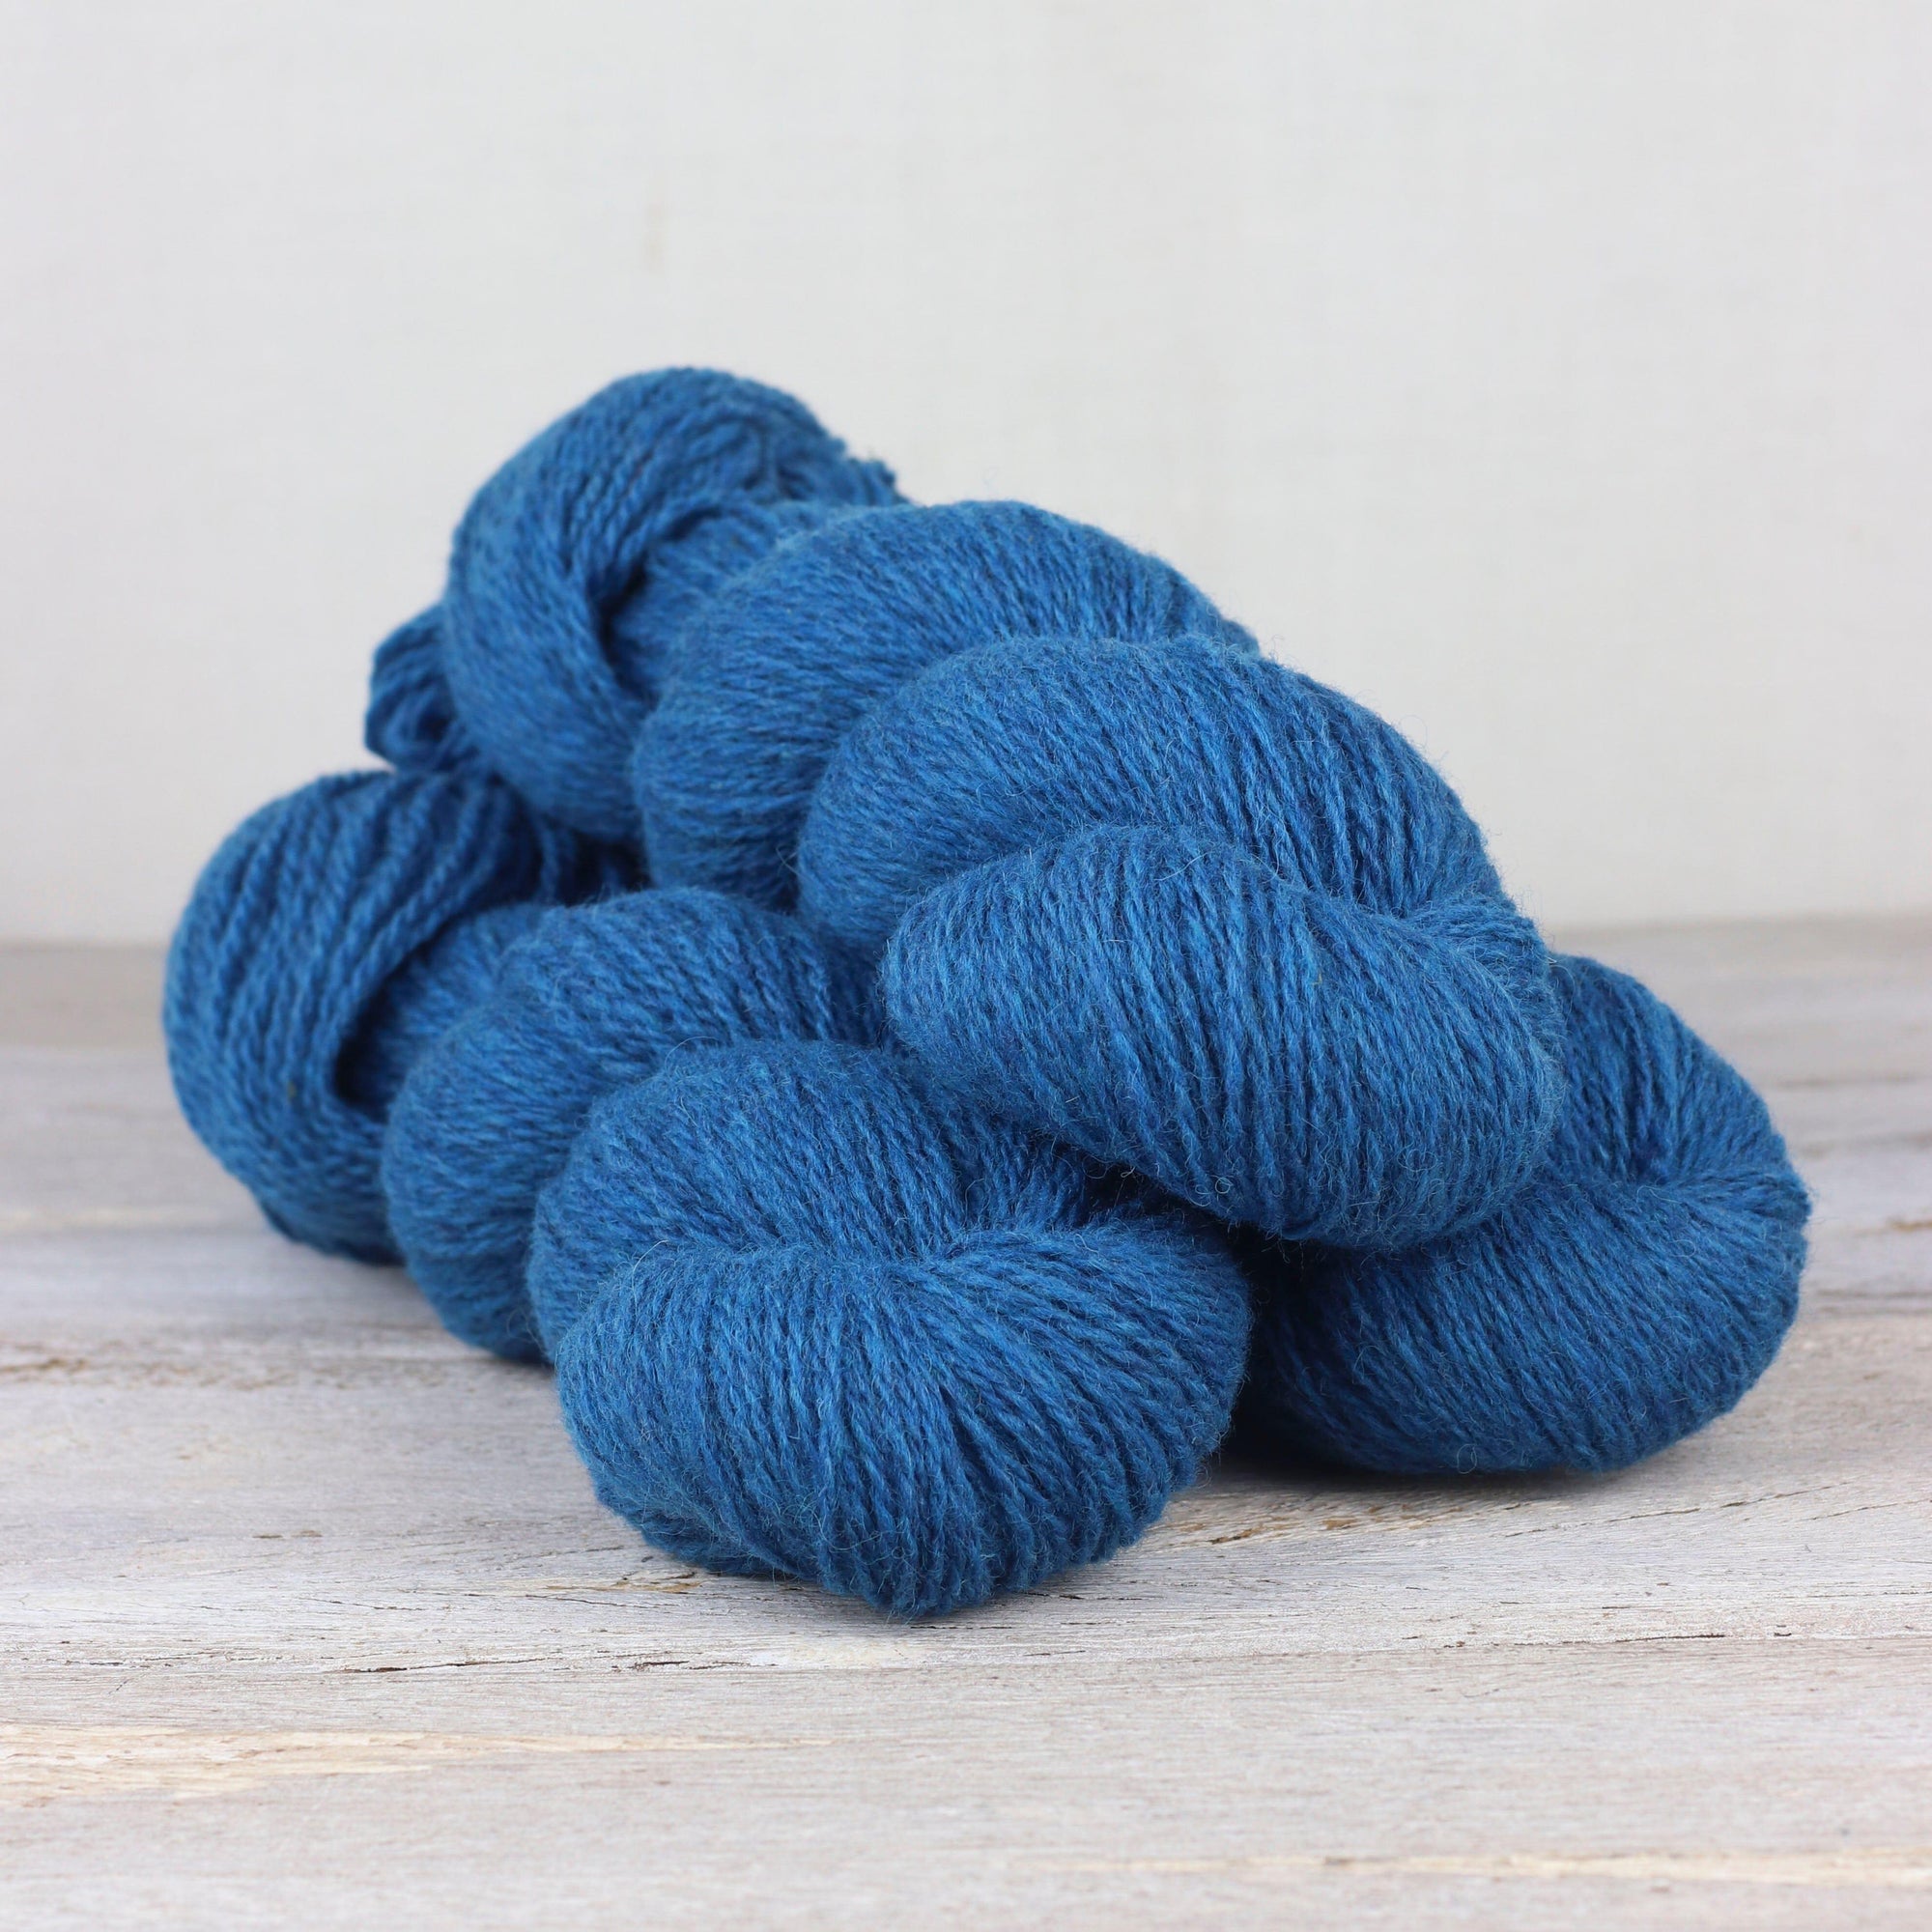 The Fibre Co. The Fibre Co. Lore - Devoted - DK Knitting Yarn